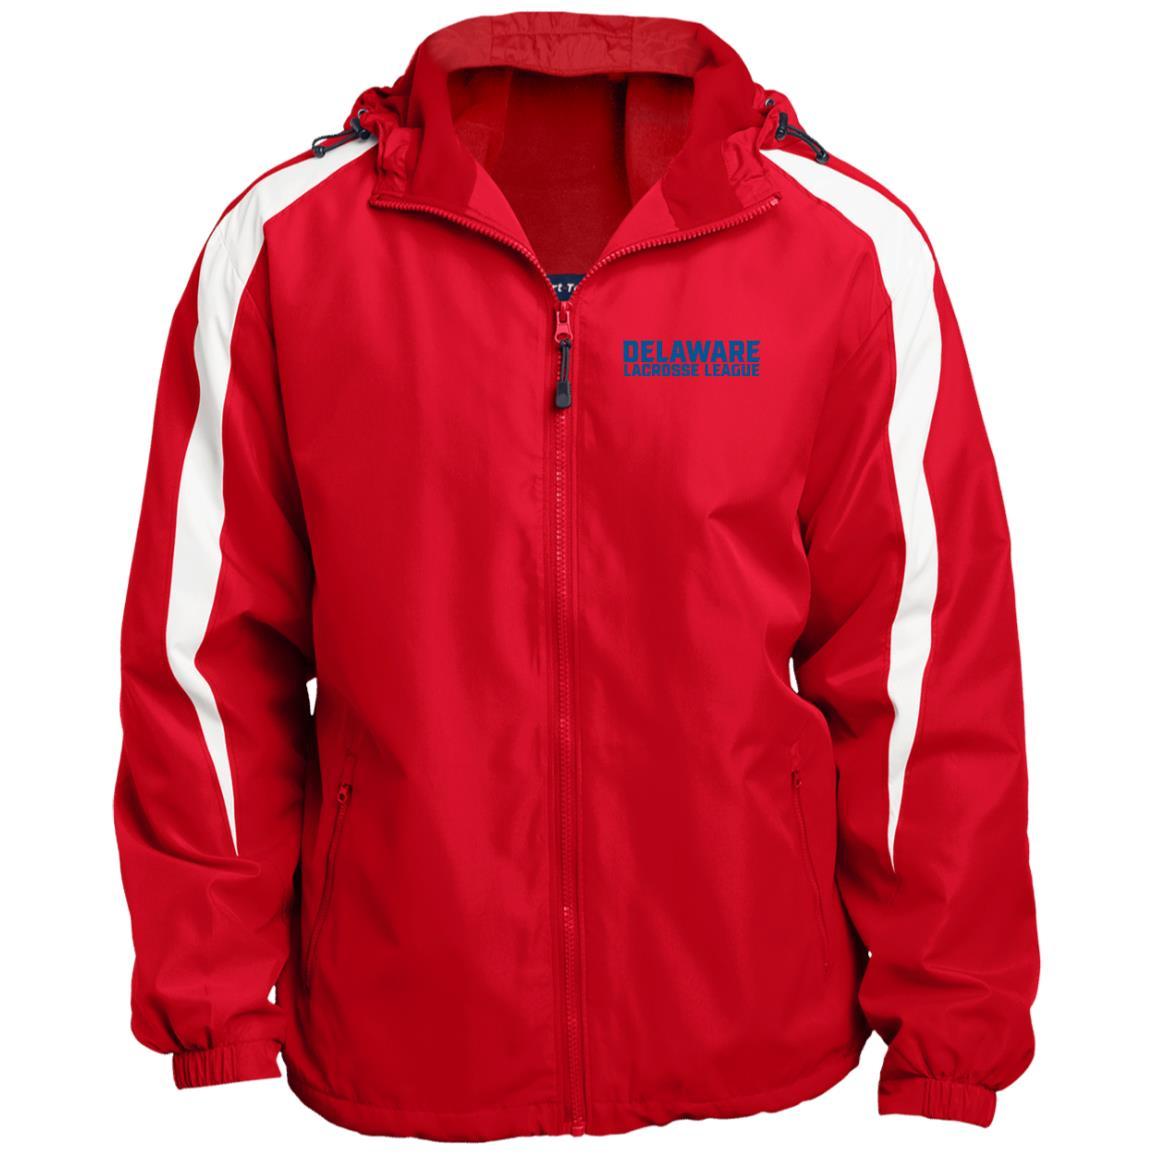 Delaware Lacrosse League Fleece Lined Hooded Premium Jacket Signature Lacrosse